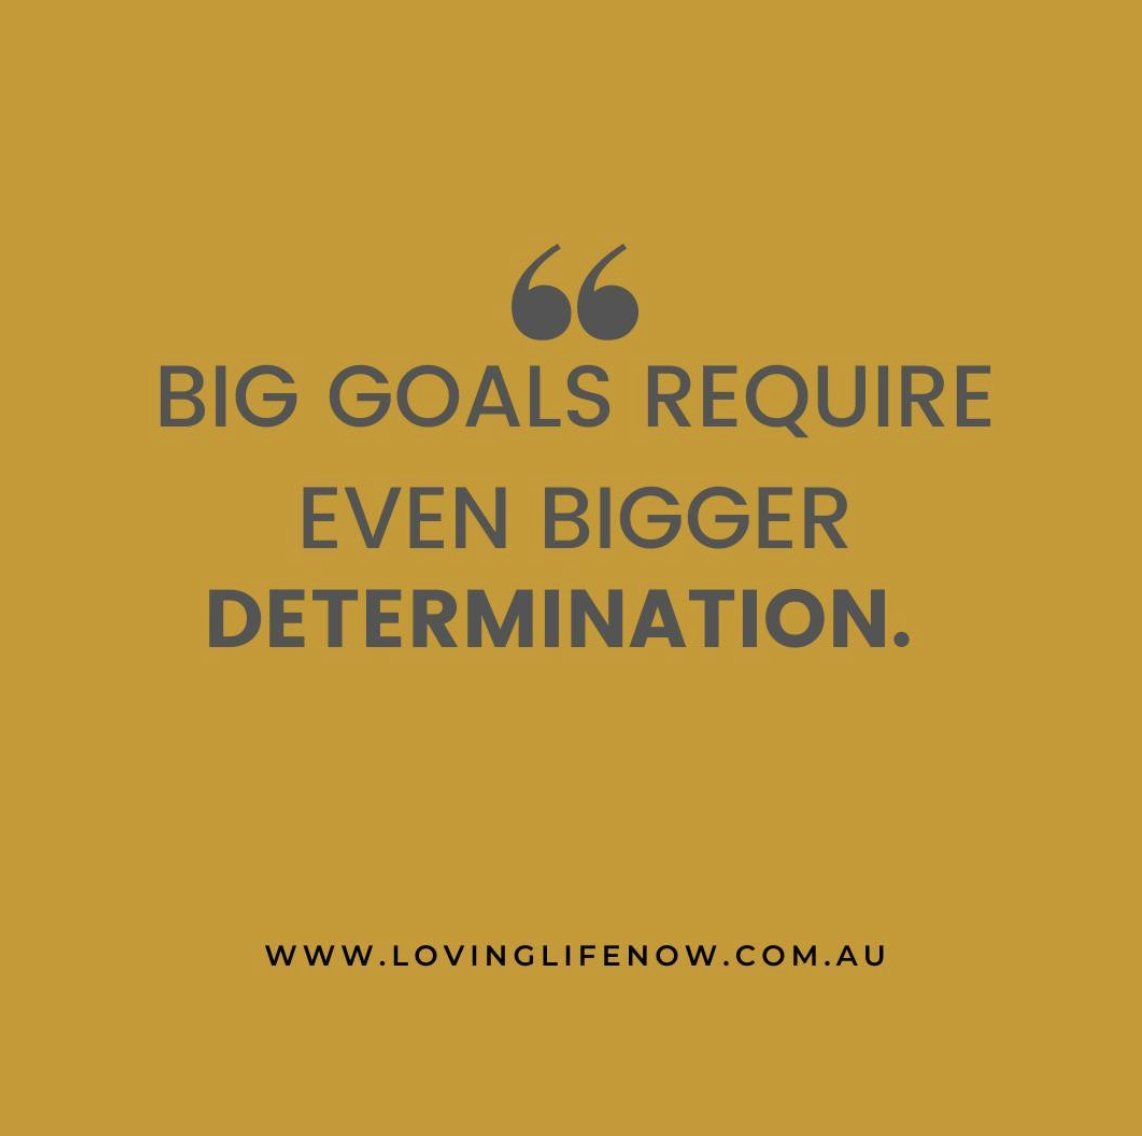 Big goals require even bigger determination
-
-
#LivingLovingLife
#OnlineIncomeOpportunity #WorkFromAnywhere #OnlineBusinessSolution
#SimonAndLeeAnne #LifestyleLoveAndBeyond
#LaptopLifestyle #PortableOnlineBusiness
#SimonHaggard #LeeAnneHaggard #LovingLifeNow